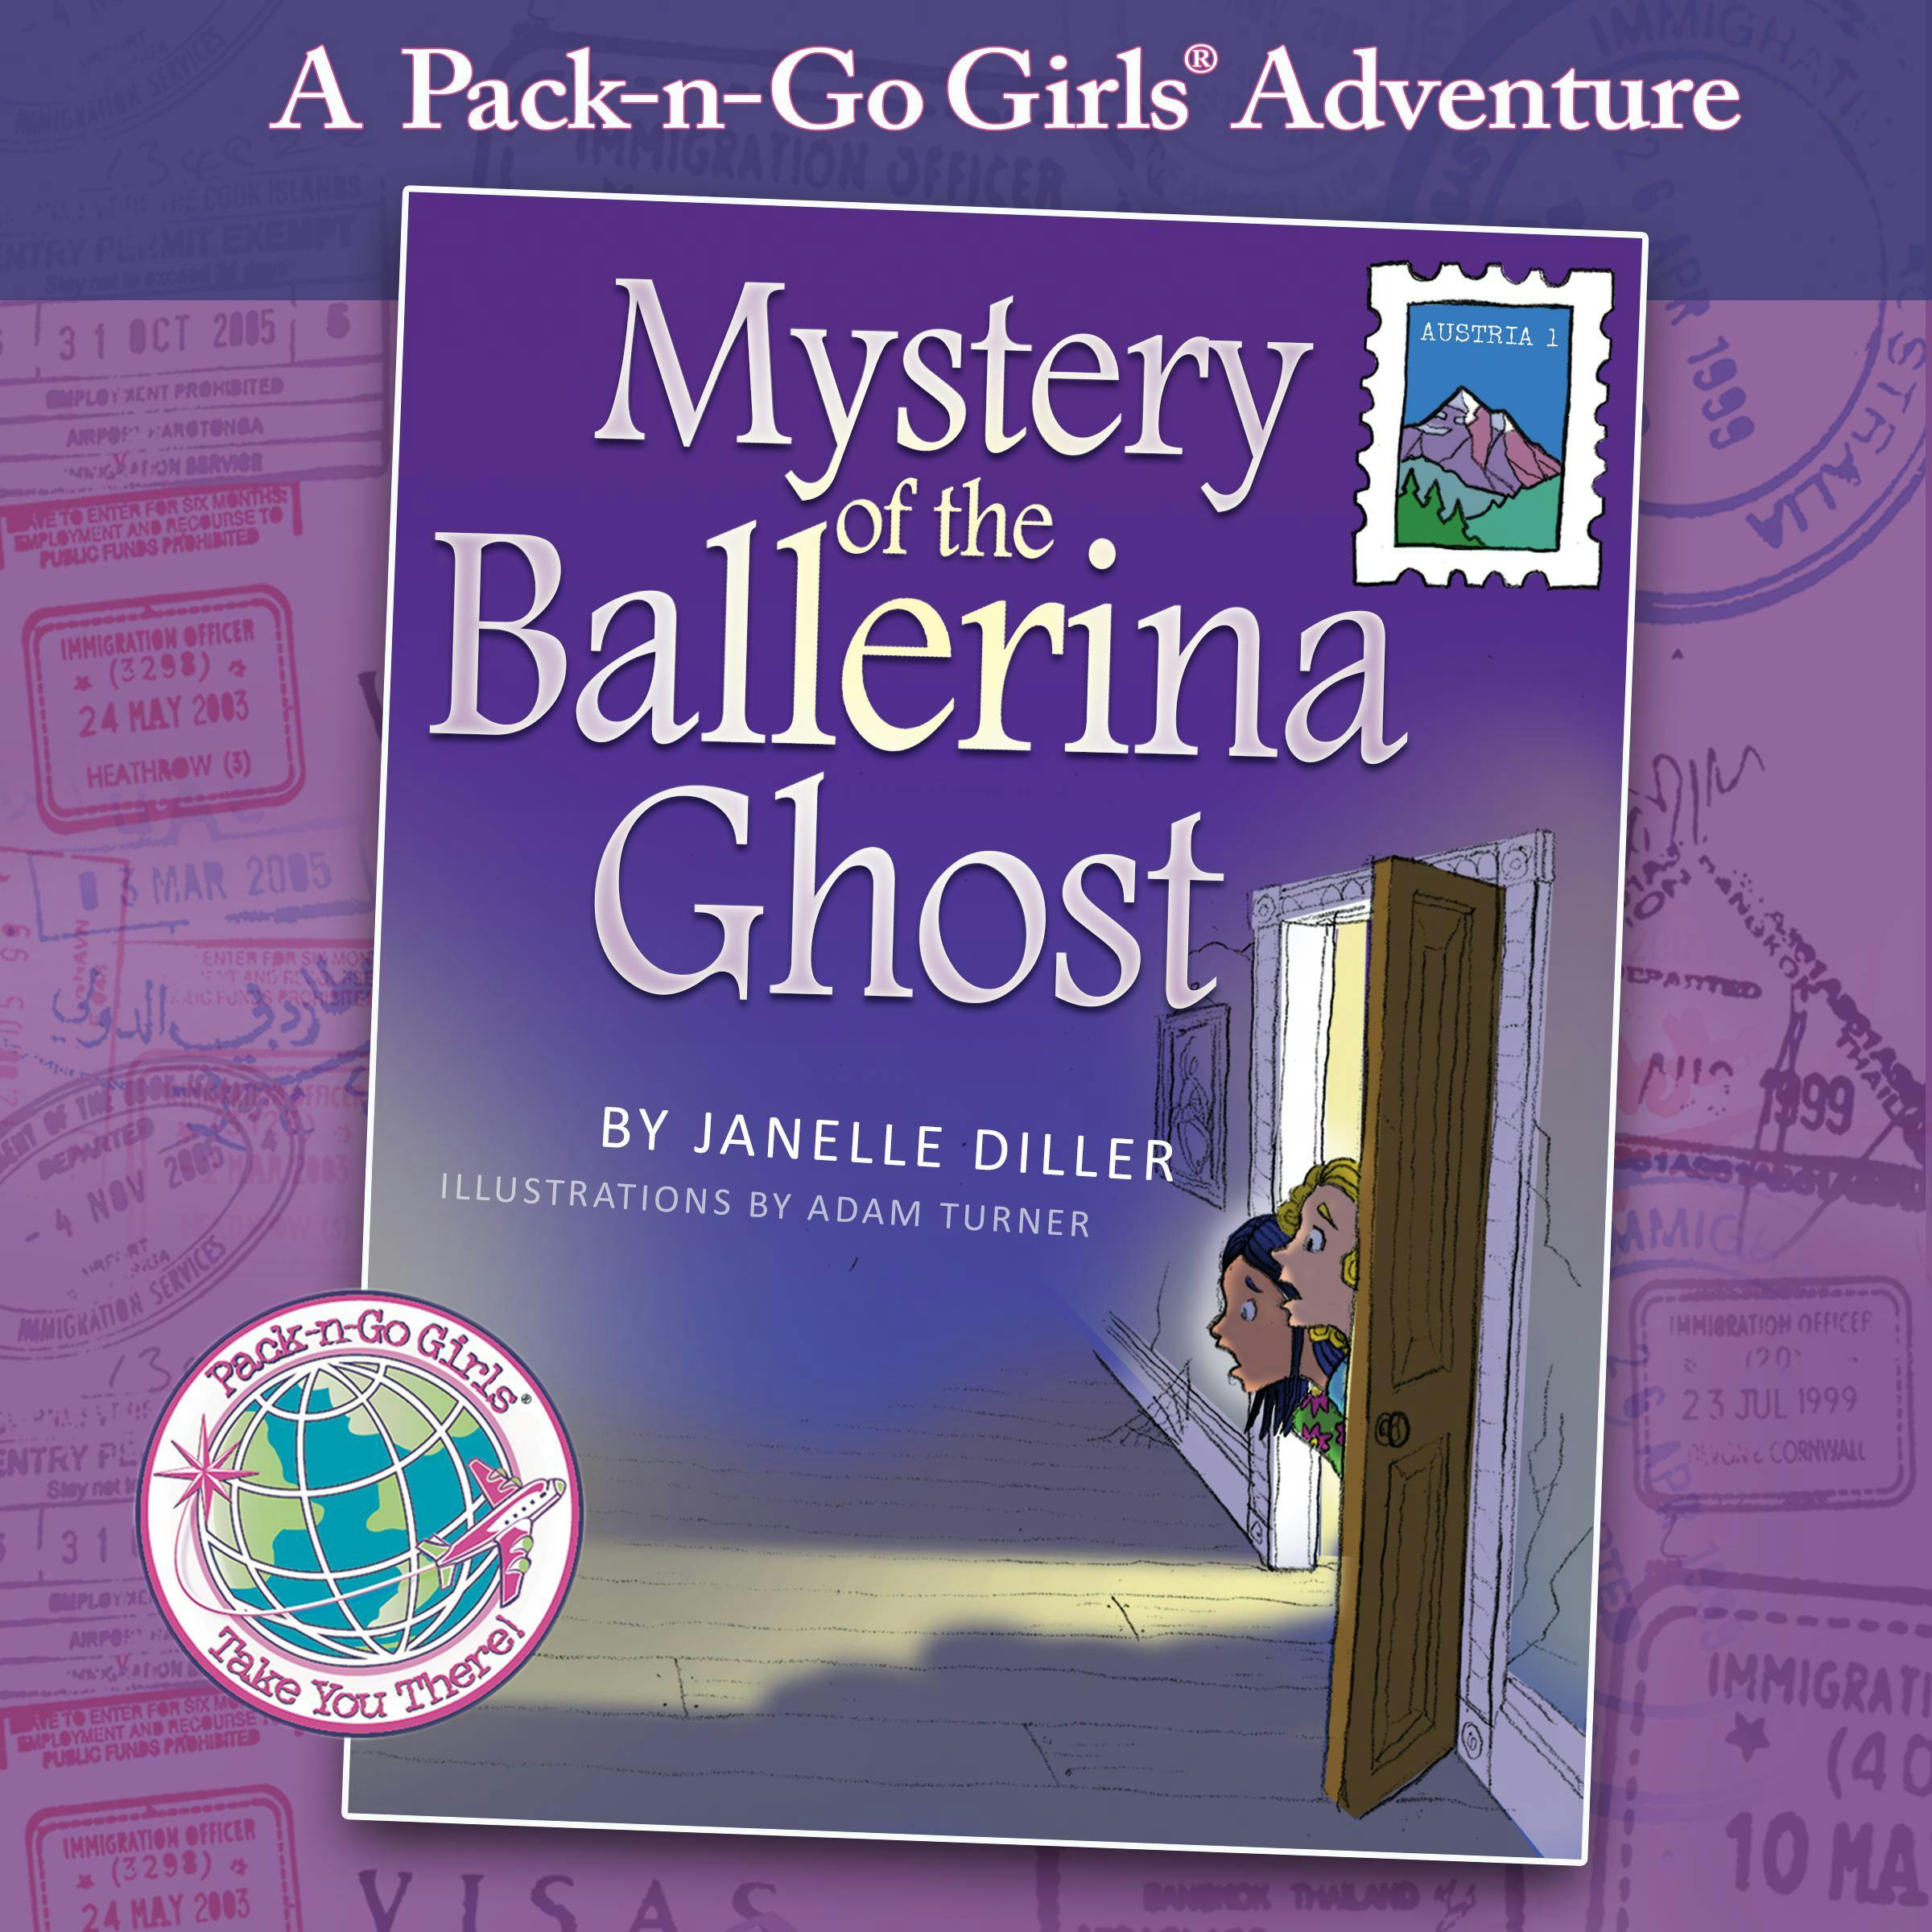 Mystery of the Ballerina Ghost: Austria 1 - Janelle Diller